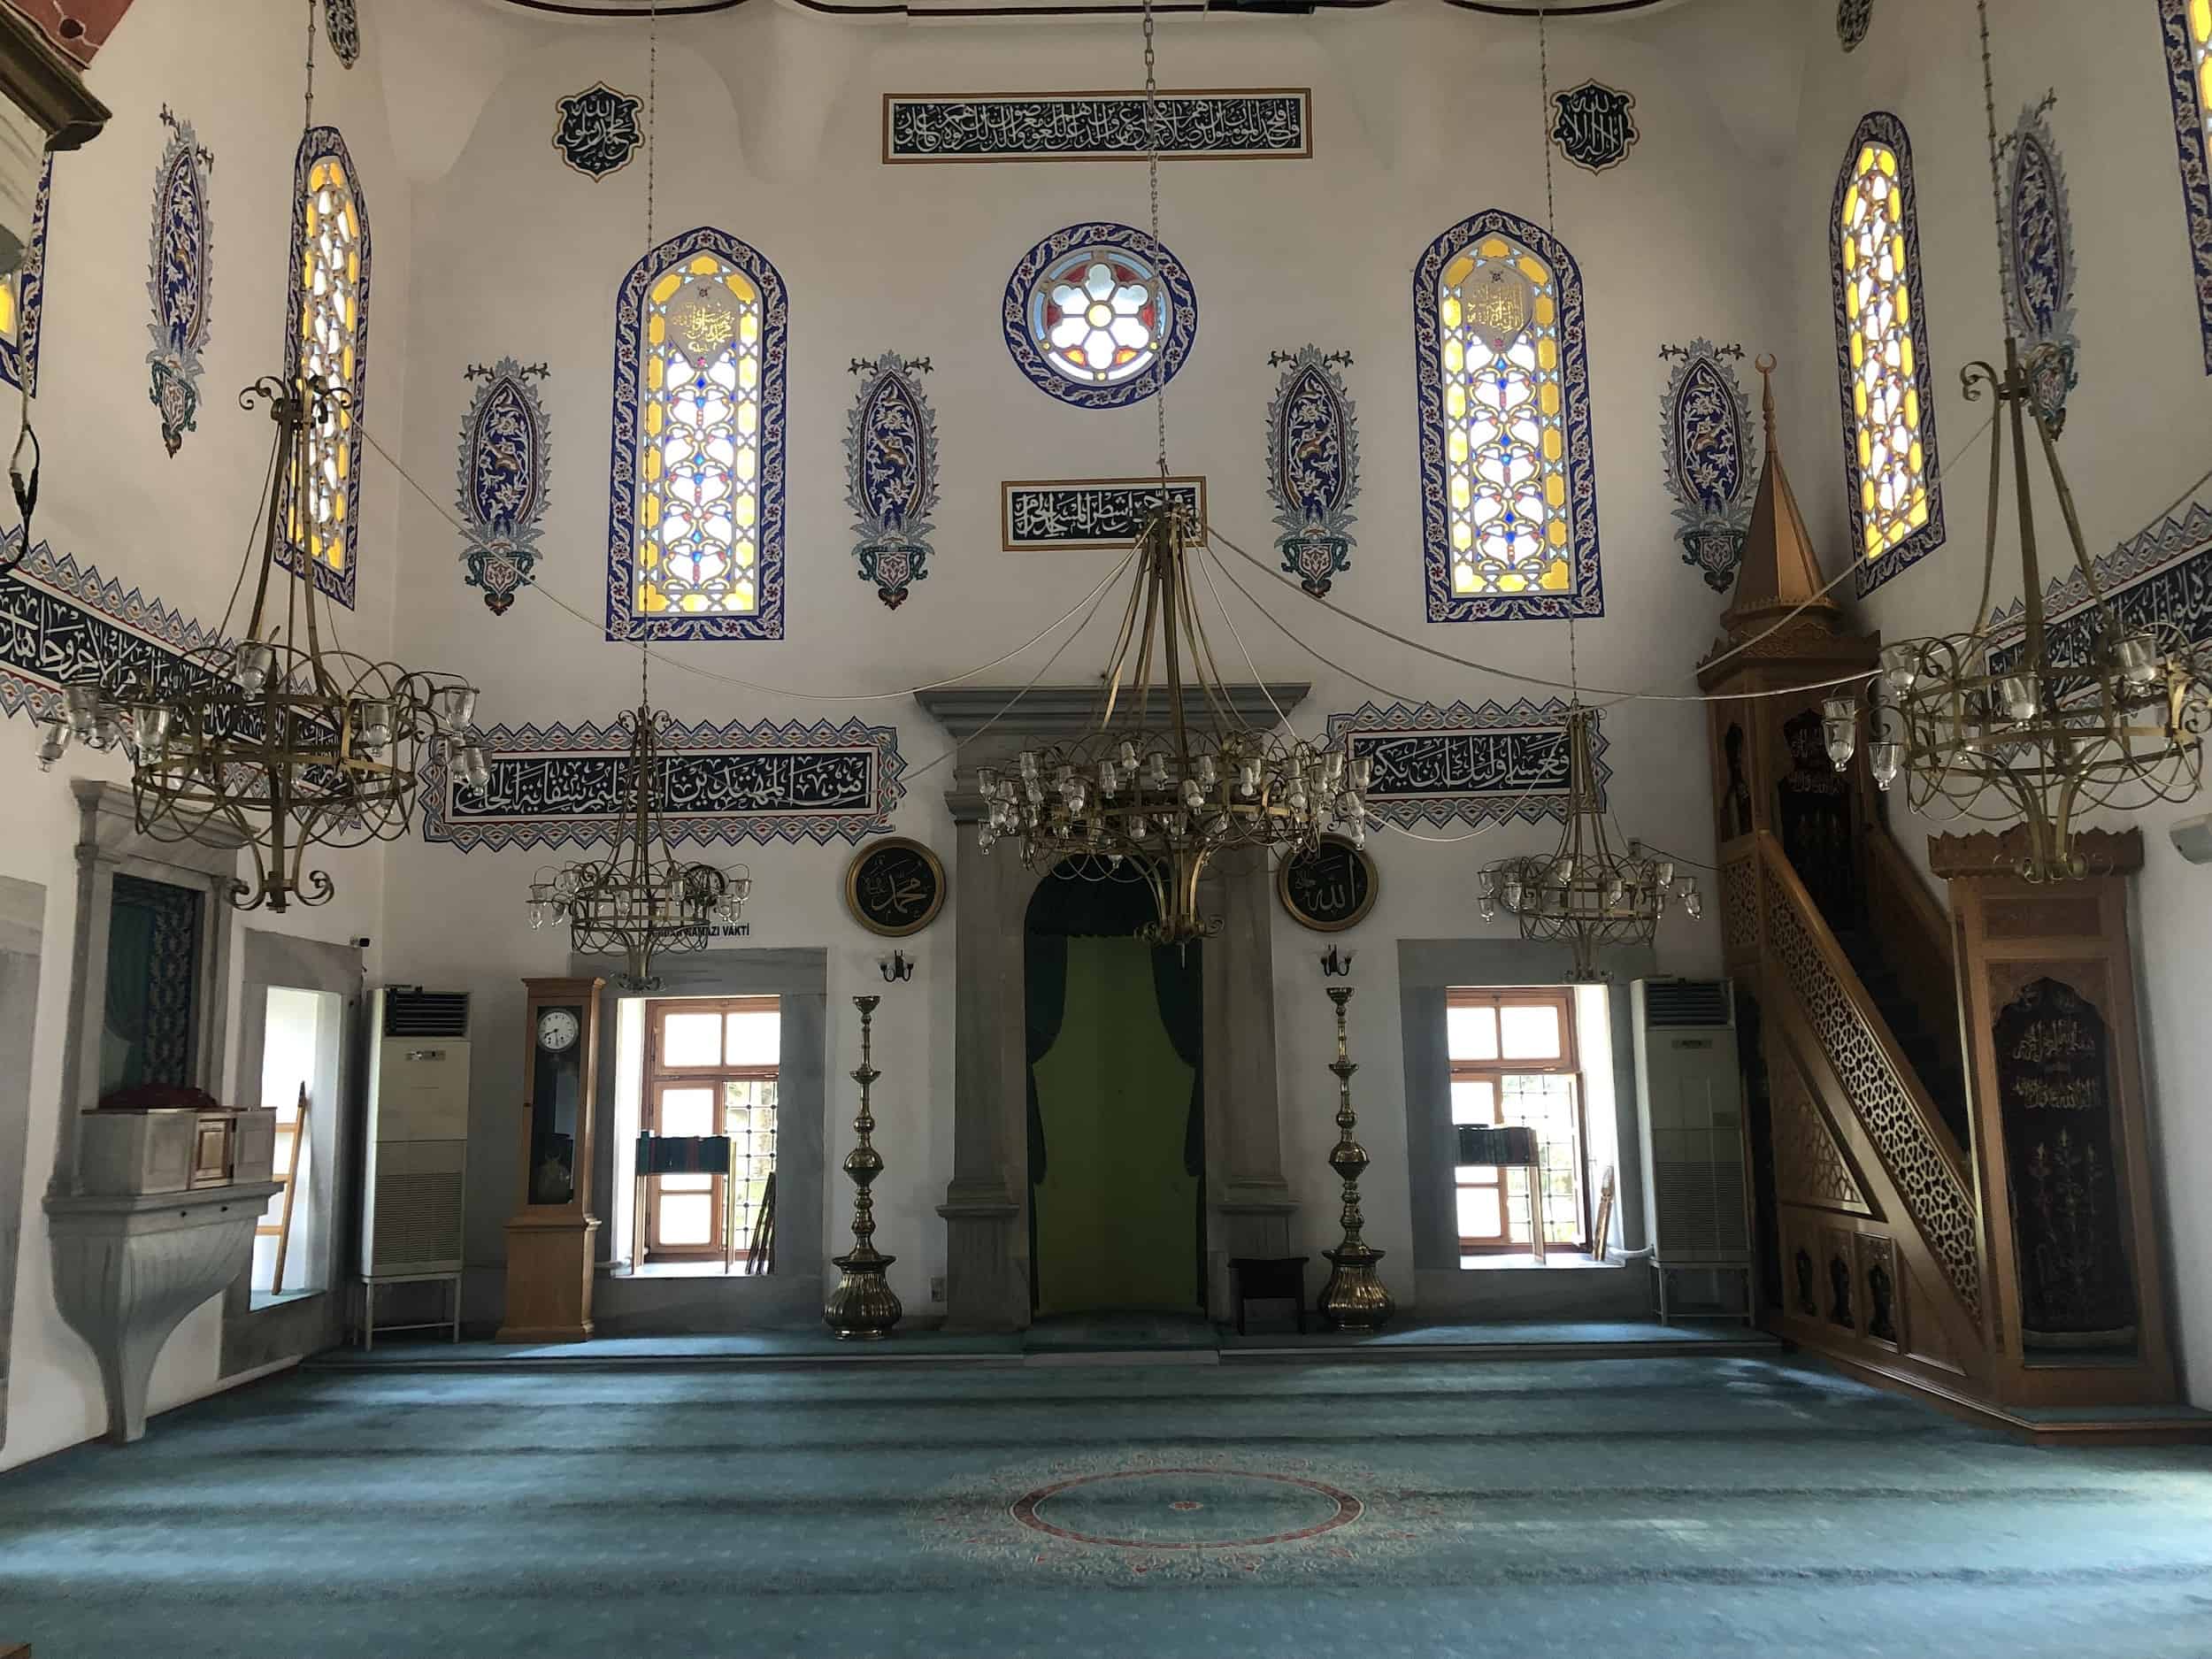 Prayer hall of the Şebsefa Hatun Mosque in Unkapanı, Istanbul, Turkey